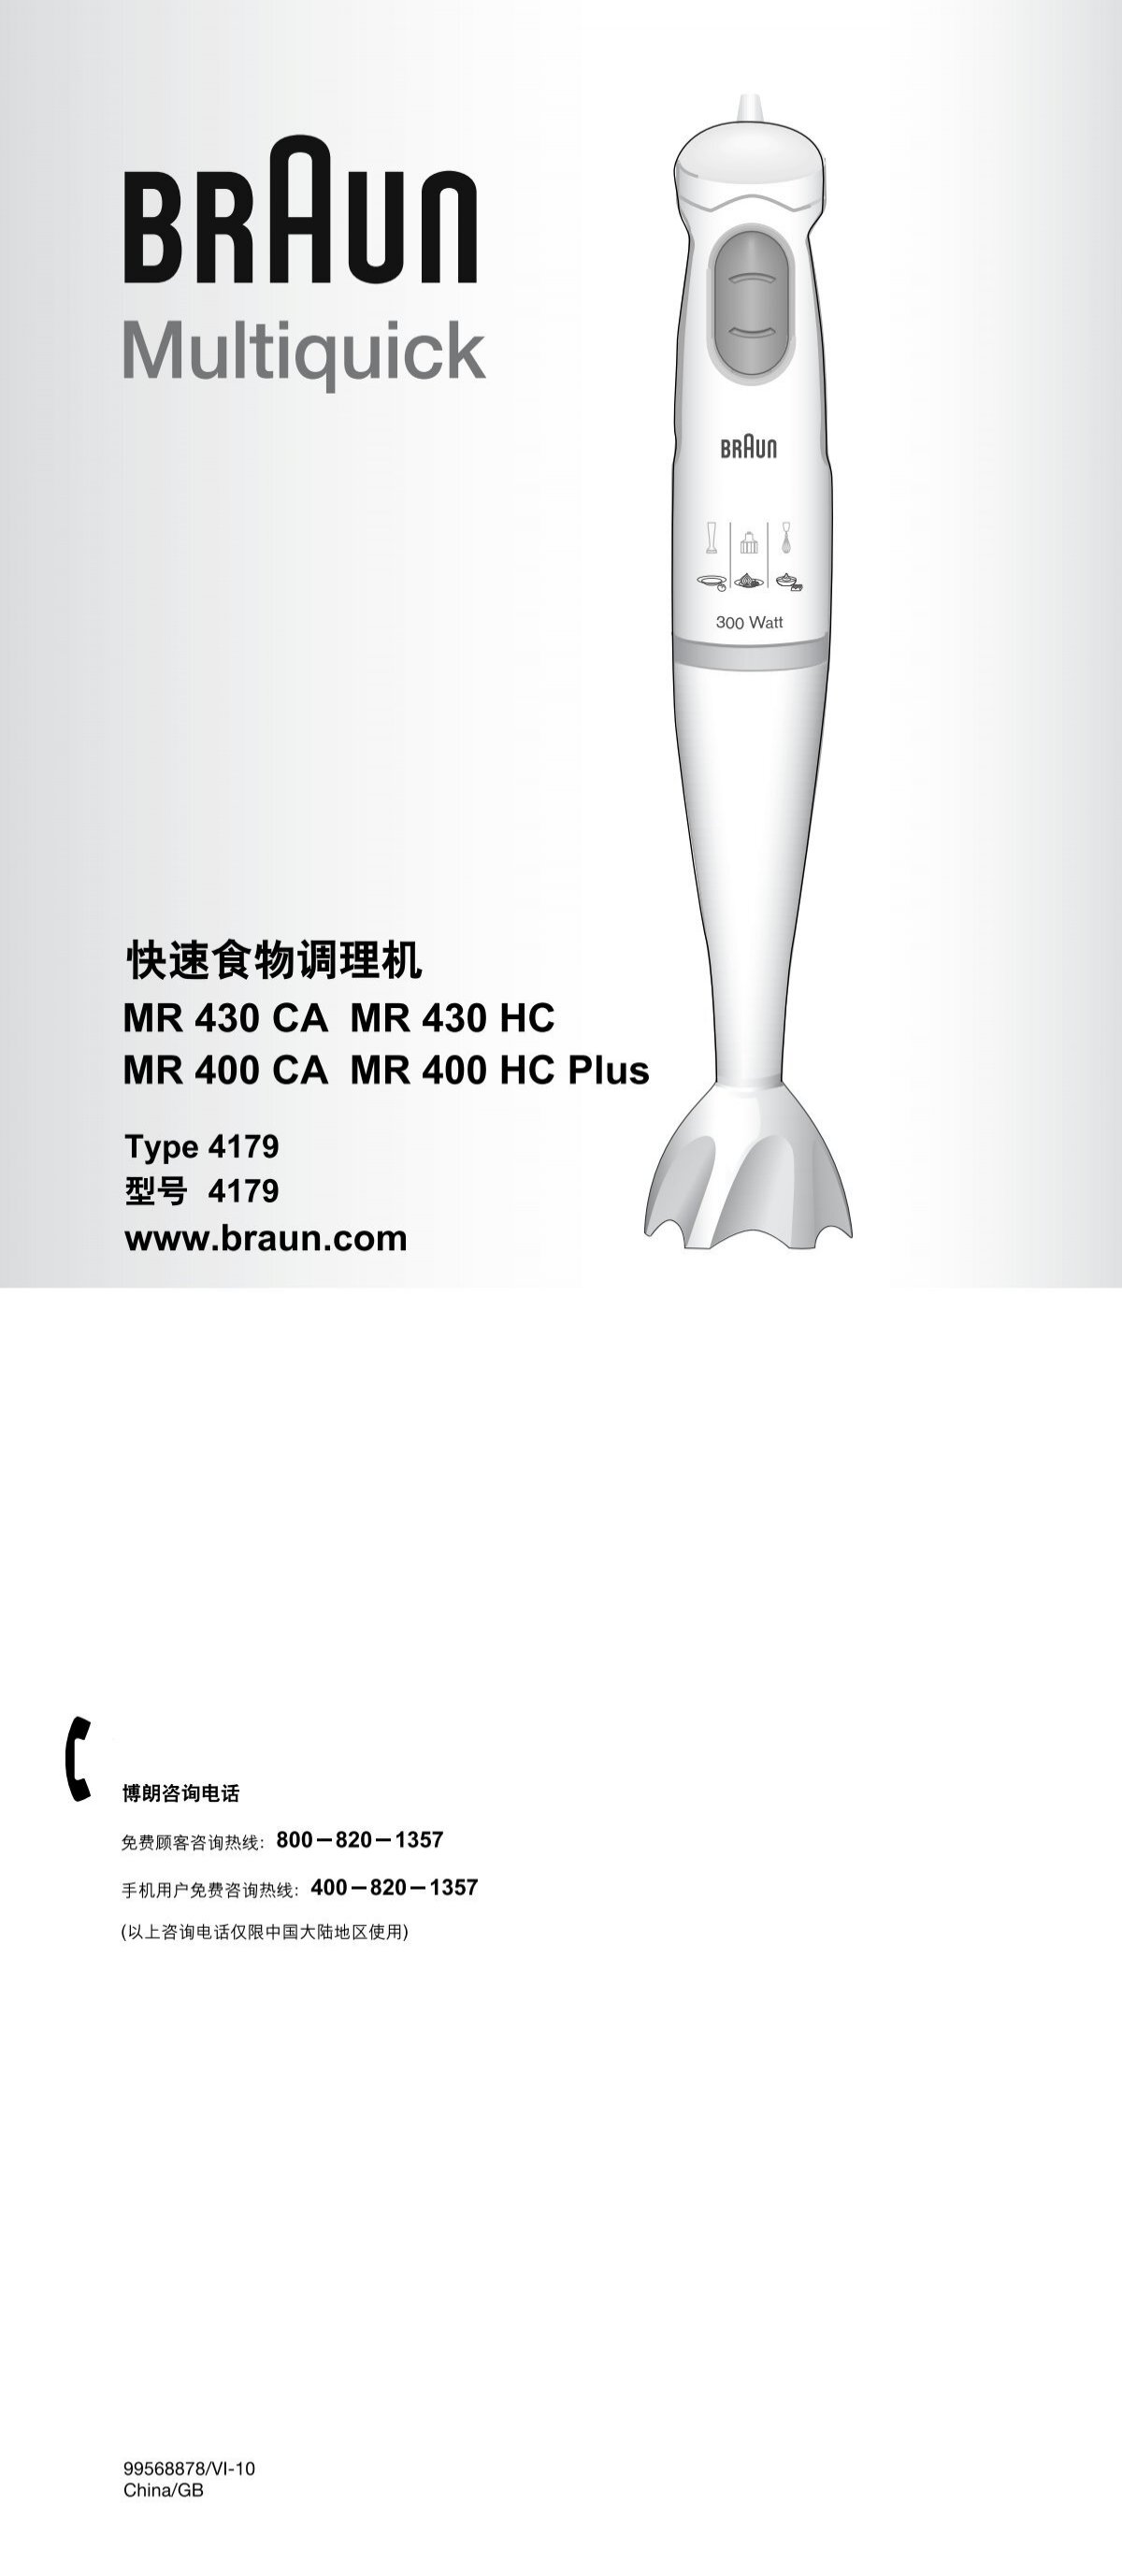 Braun MultiQuick9 Hand Blender Spare Replacement Parts Accessories